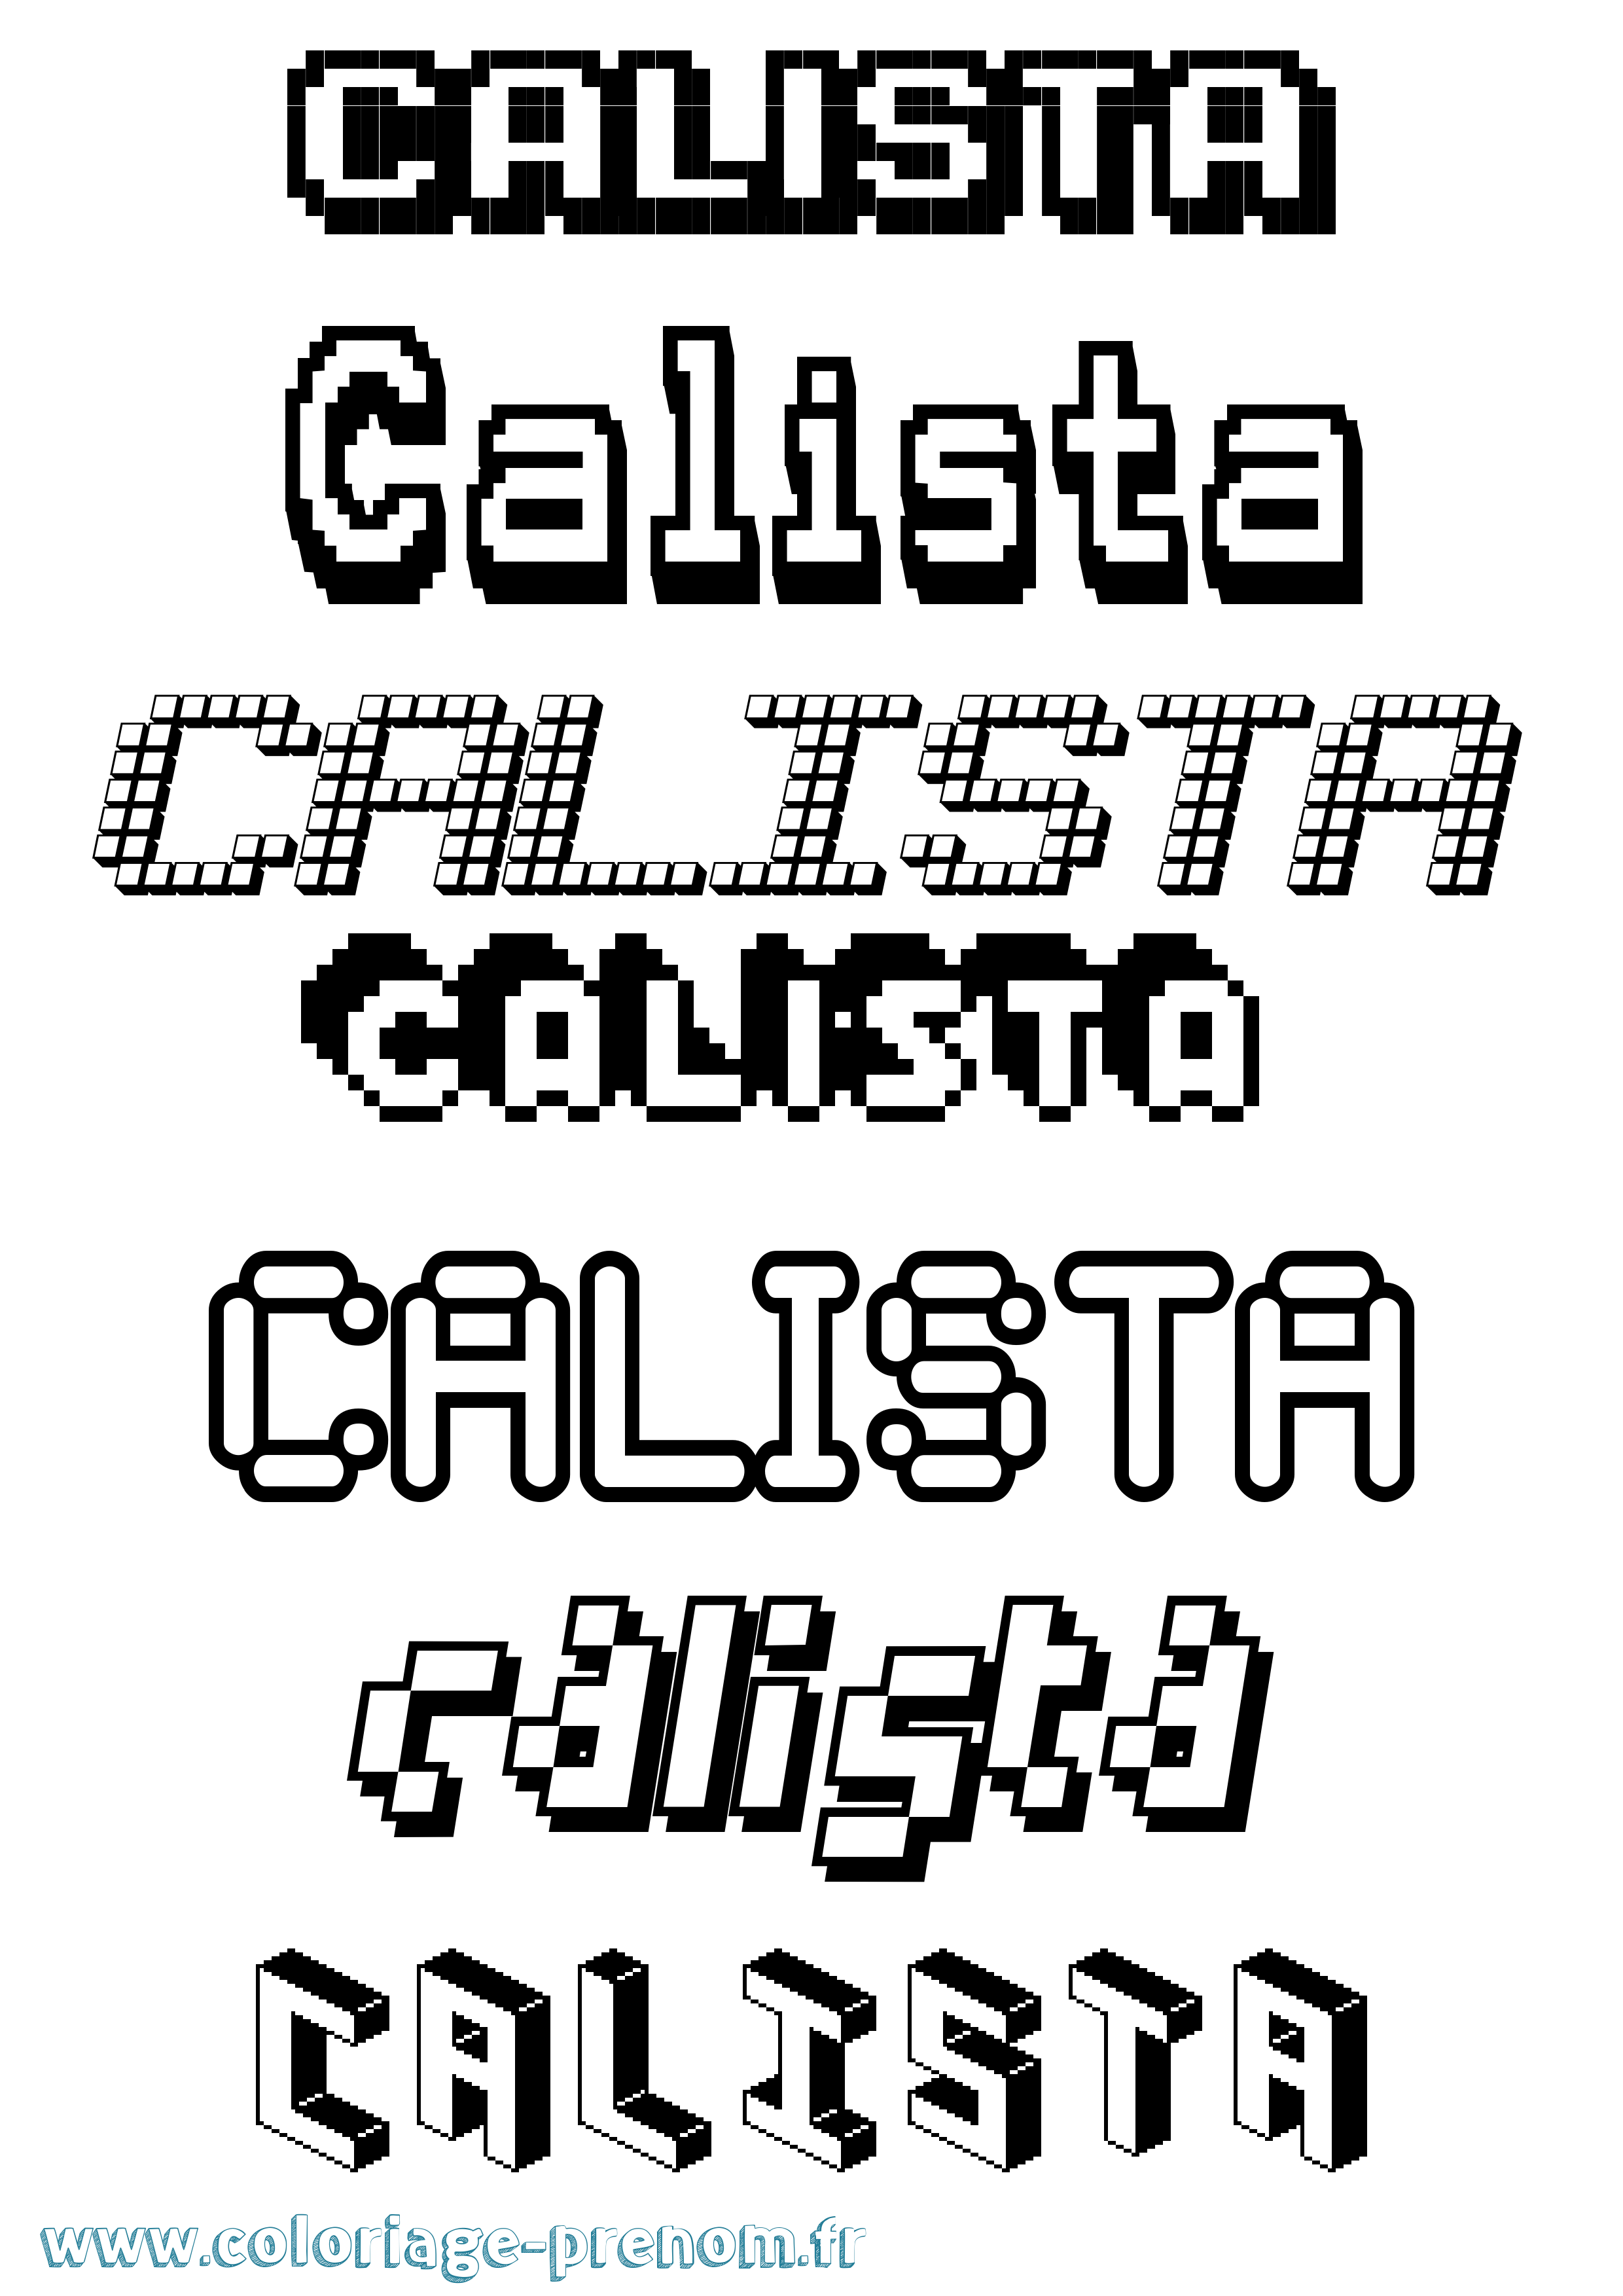 Coloriage prénom Calista